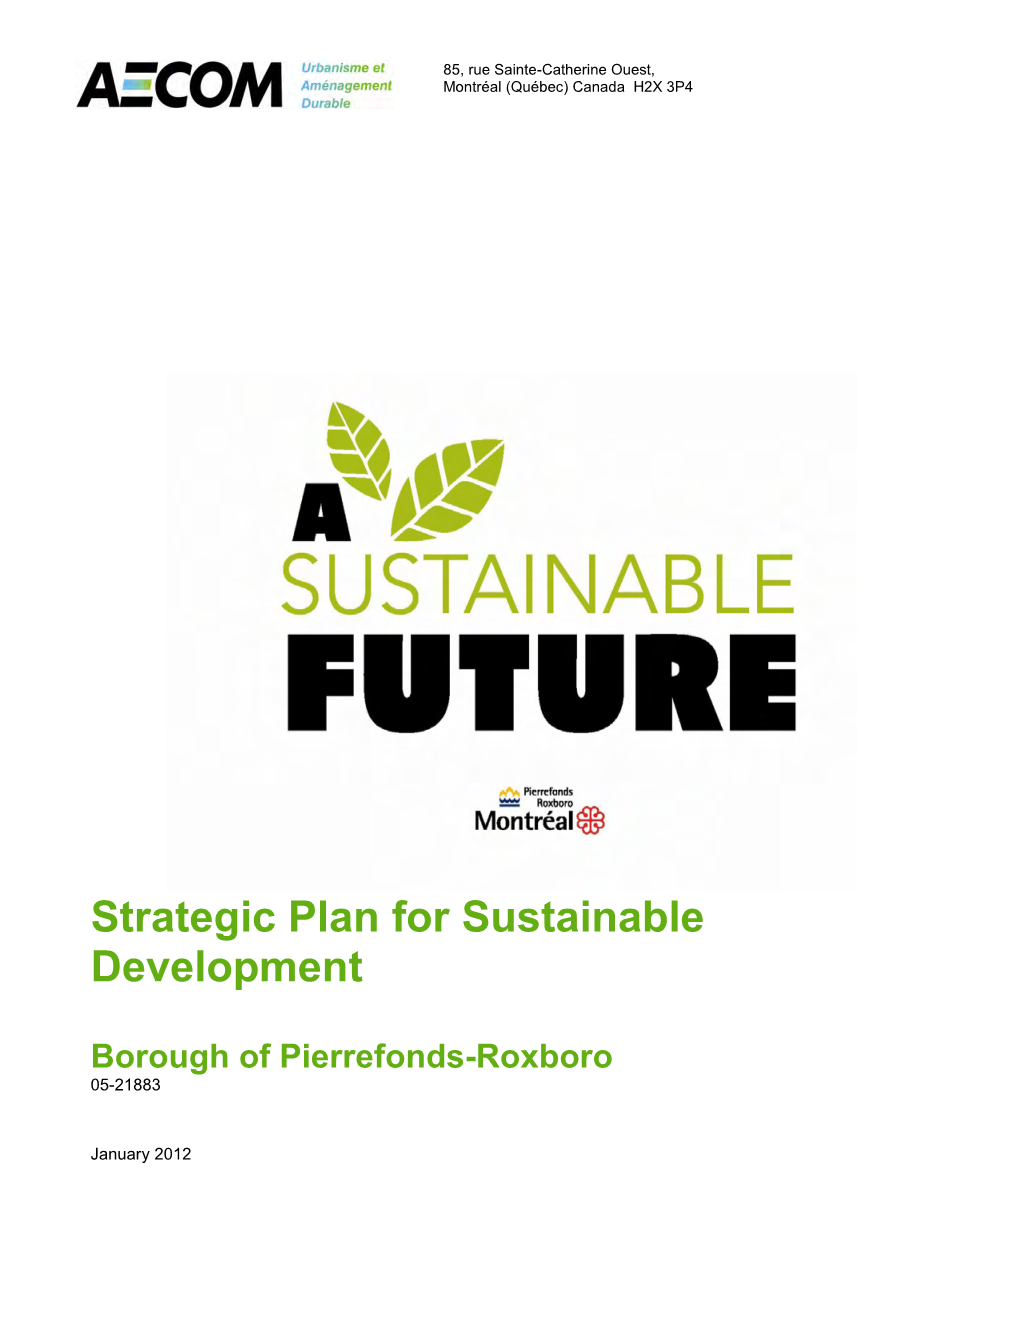 Strategic Plan for Sustainable Development